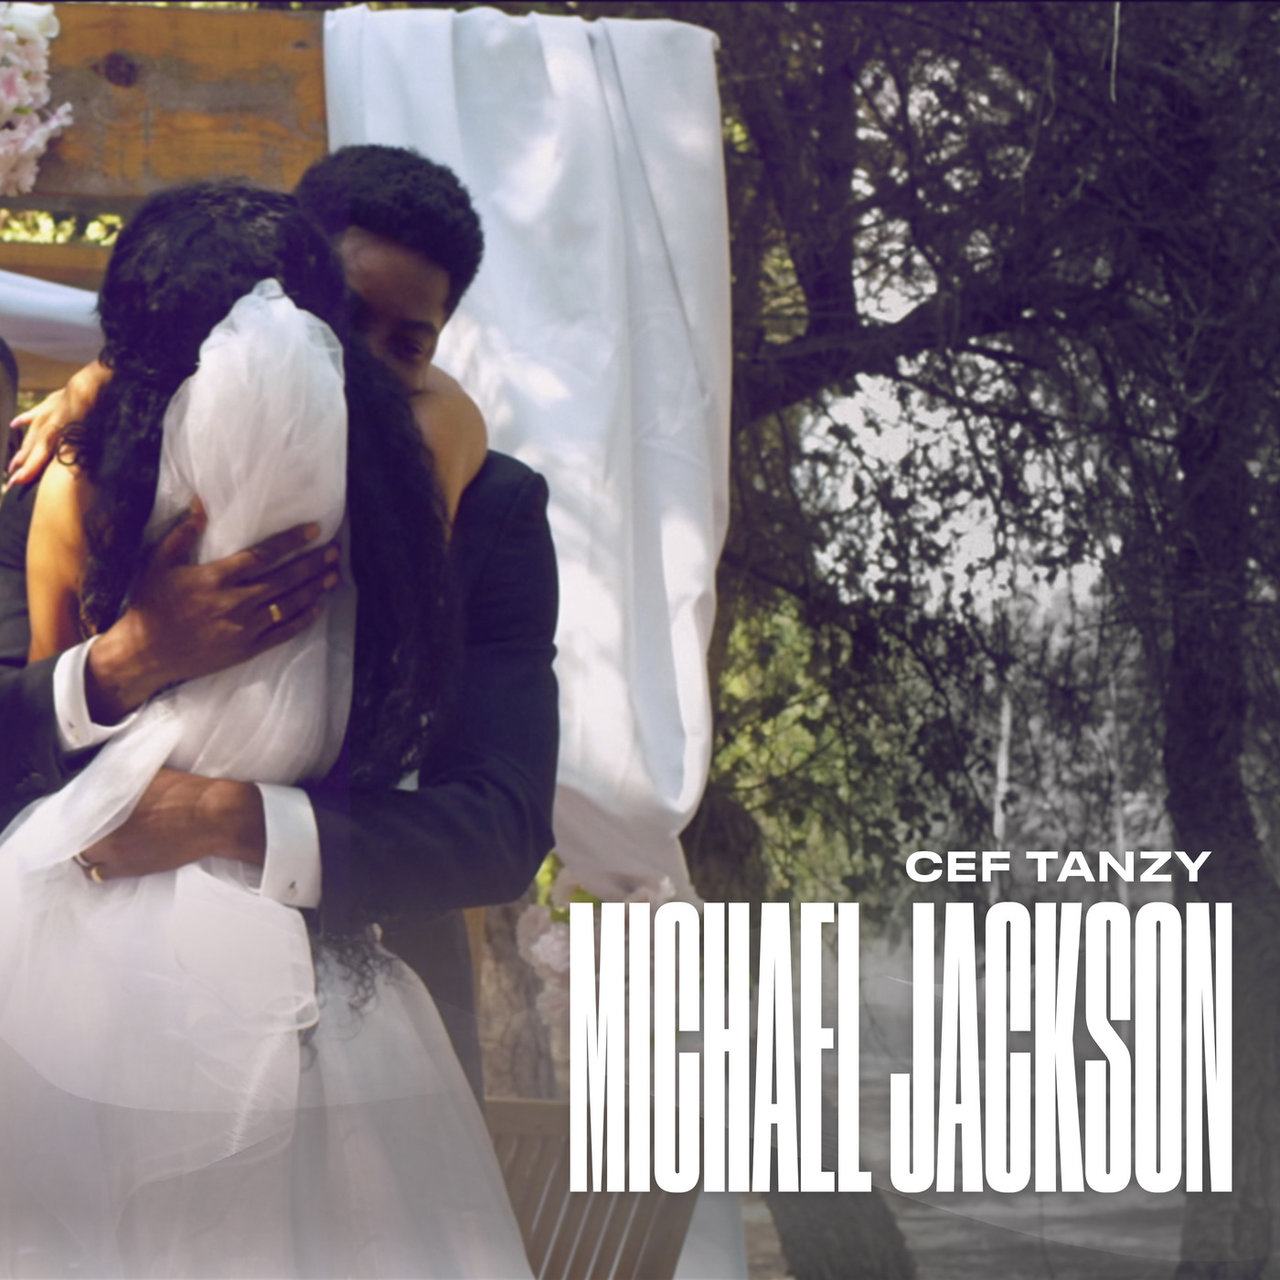 Cef Tanzy - Michael Jackson (Cover)